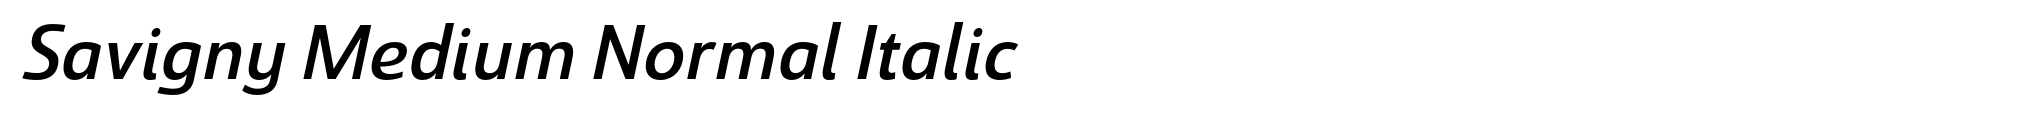 Savigny Medium Normal Italic image